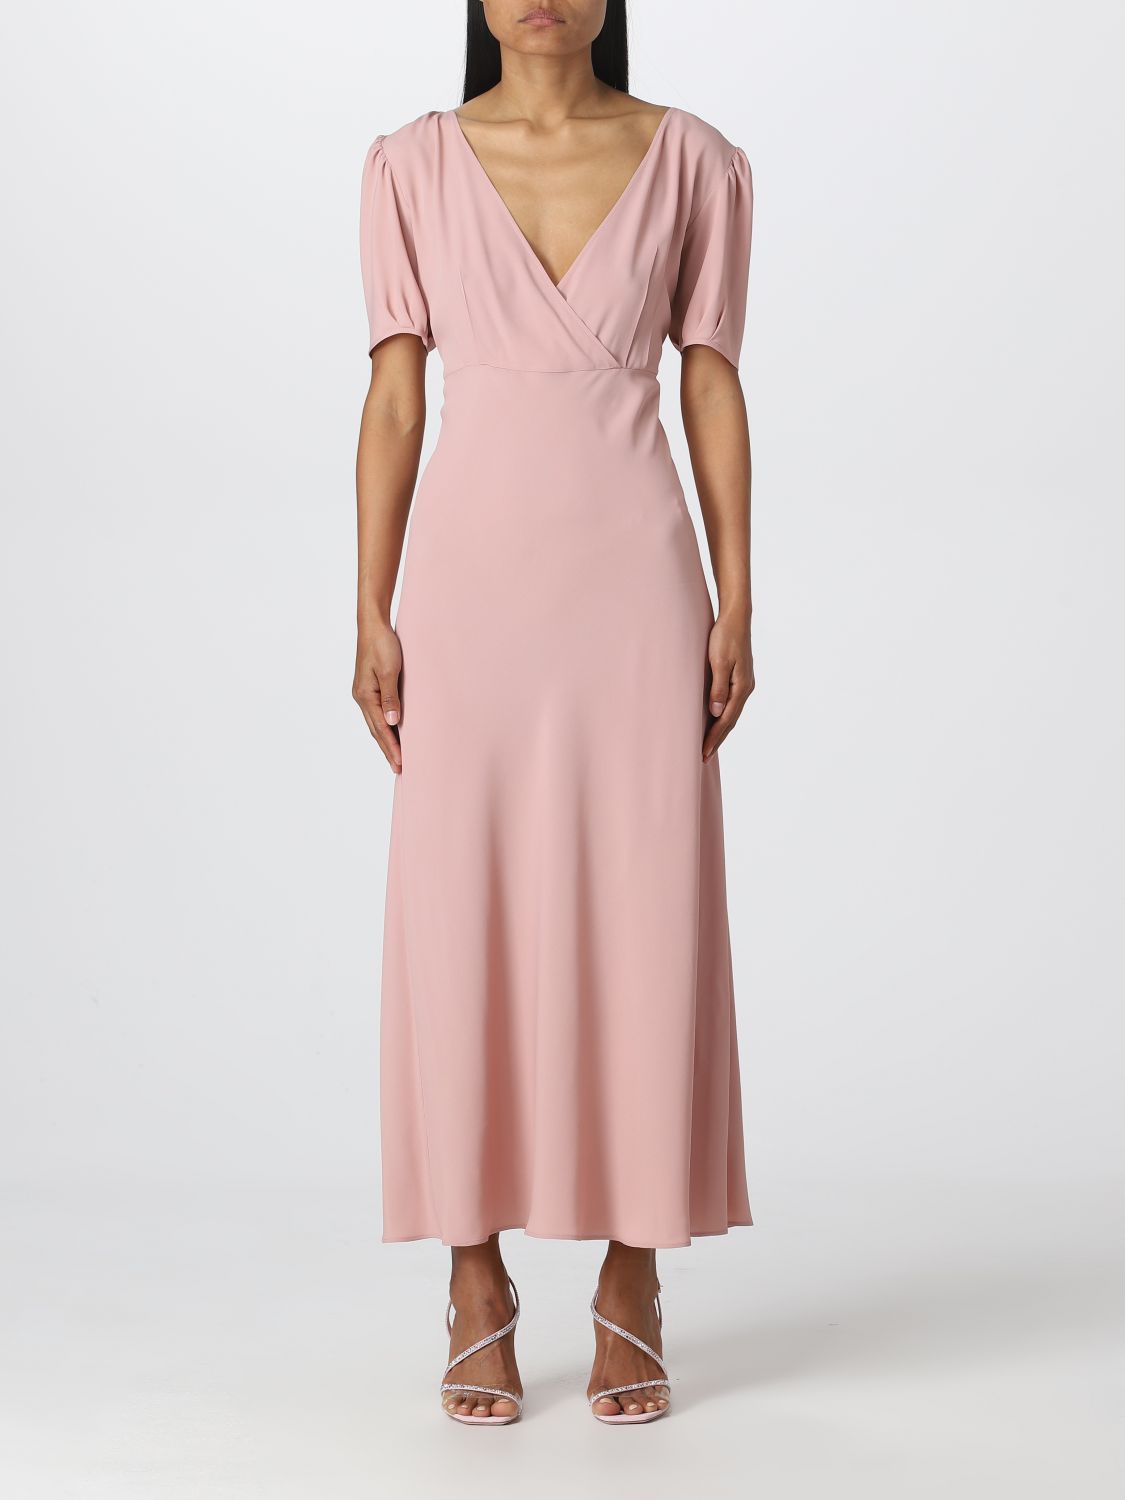 N°21 Dress N° 21 Woman Color Blush Pink